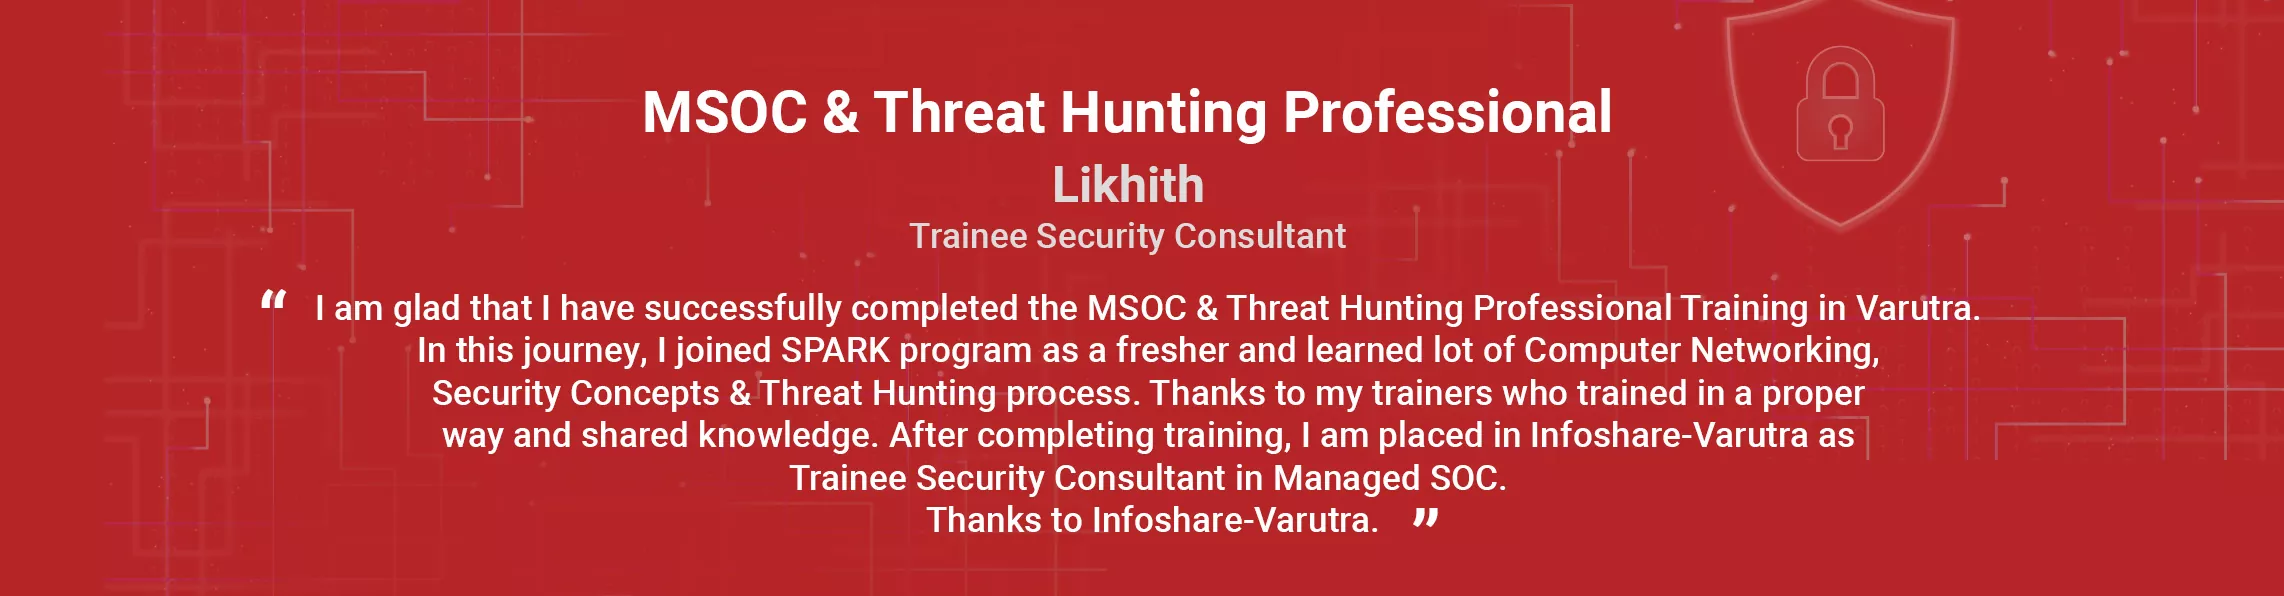 MSOC Threat Hunting Professional MSOC Threat Hunting Professional Likhith Testimonial